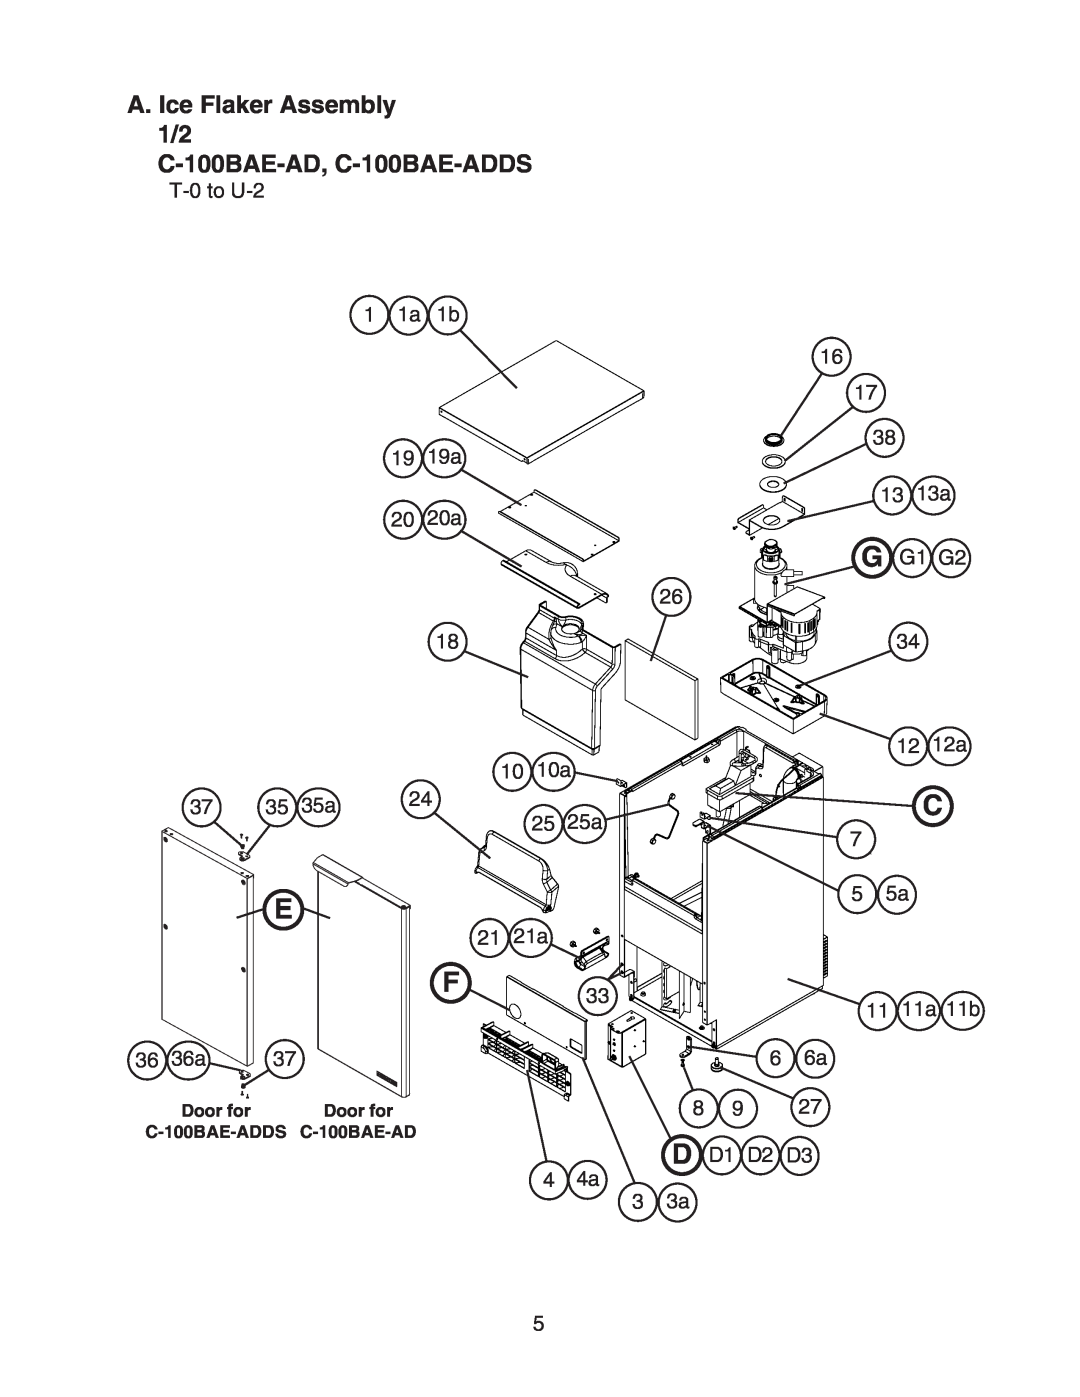 Hoshizaki manual A. Ice Flaker Assembly 1/2 C-100BAE-AD, C-100BAE-ADDS 